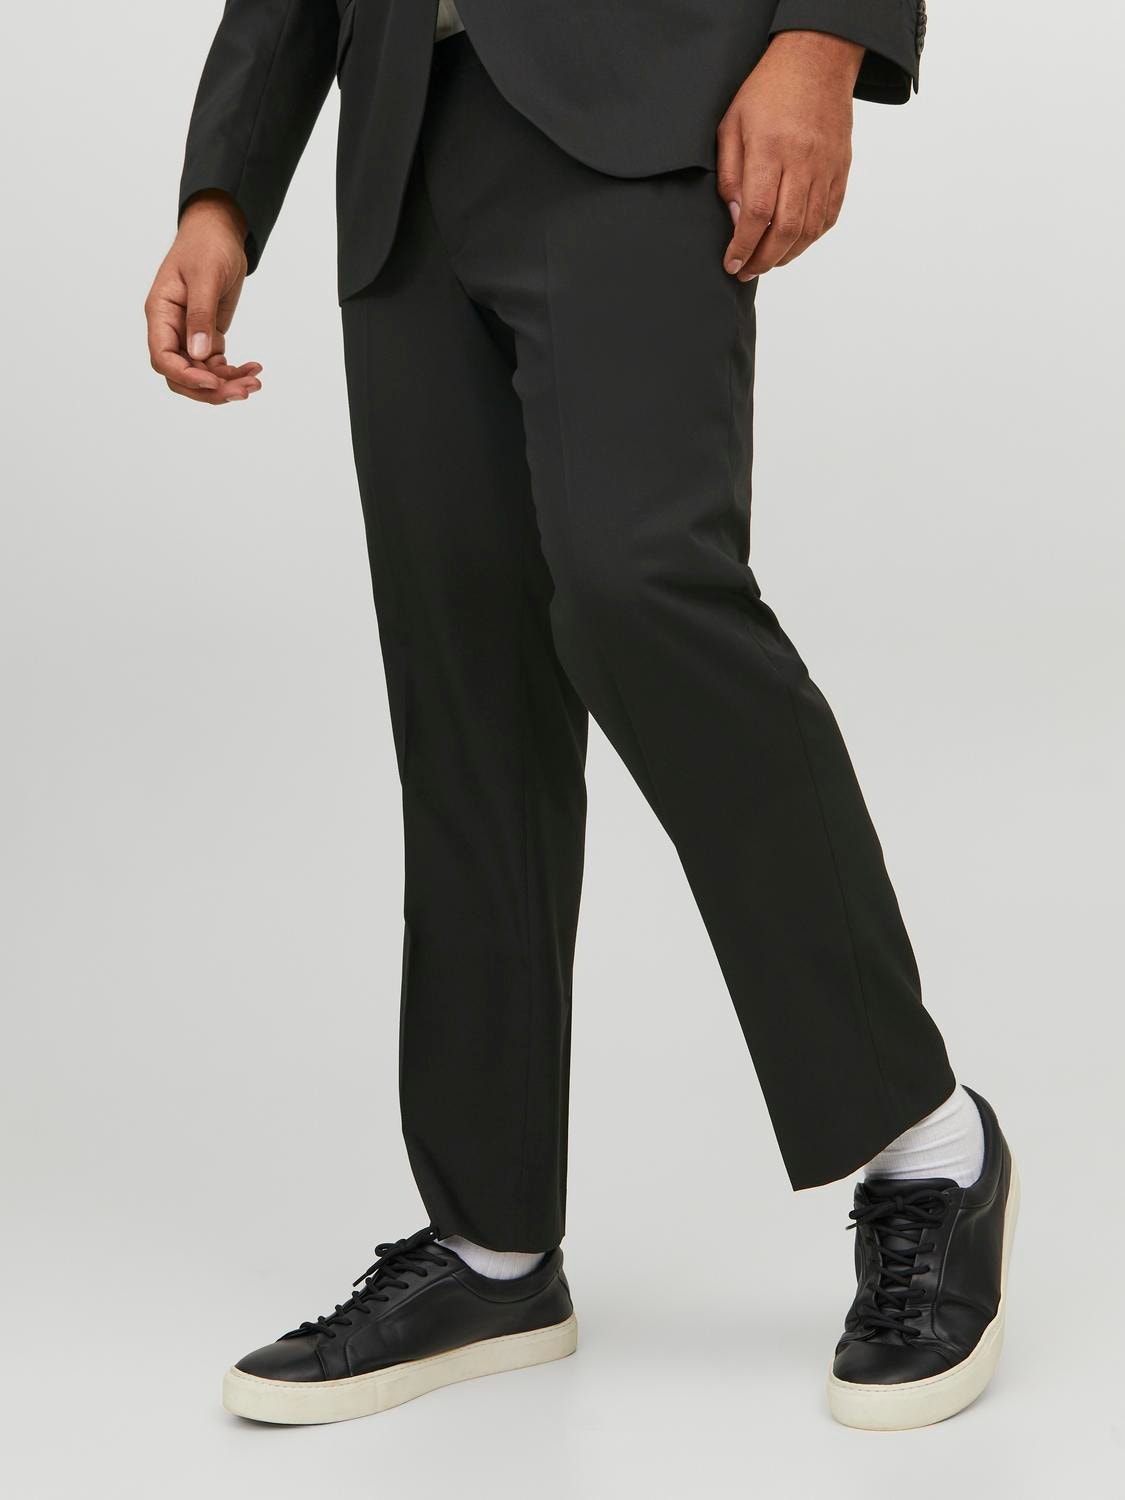 Men's Premium Slim Fit Dress Pants Slacks